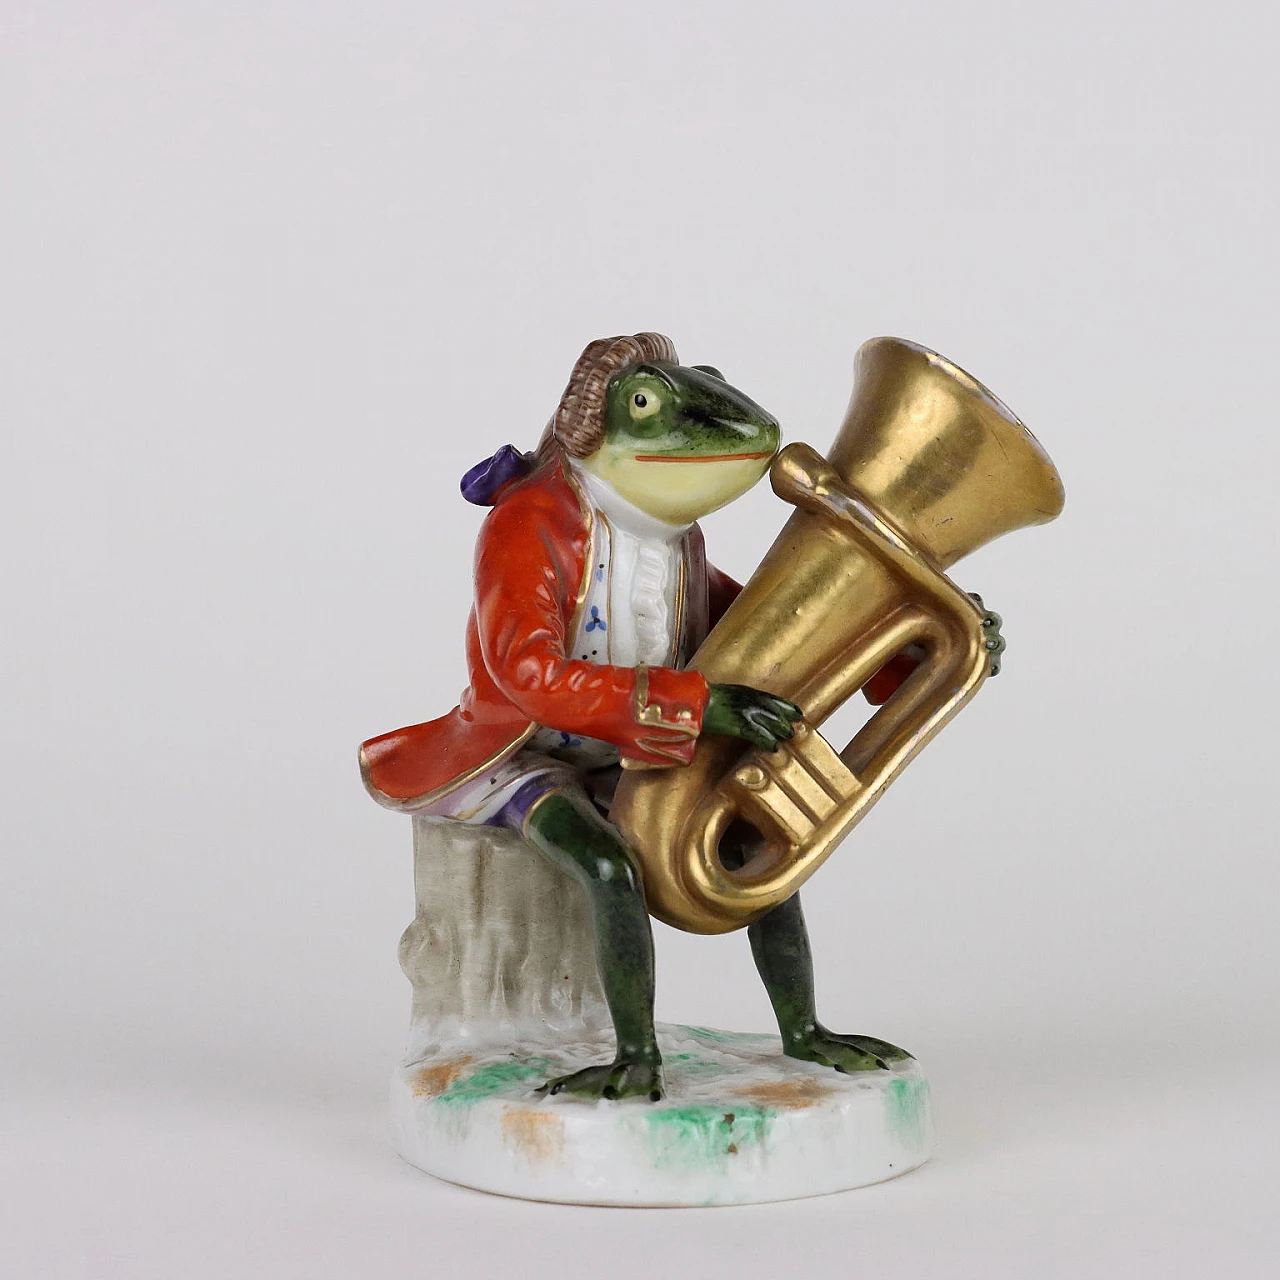 Sitzendorf porcelain figurine of frog with trombone, 19th century 3